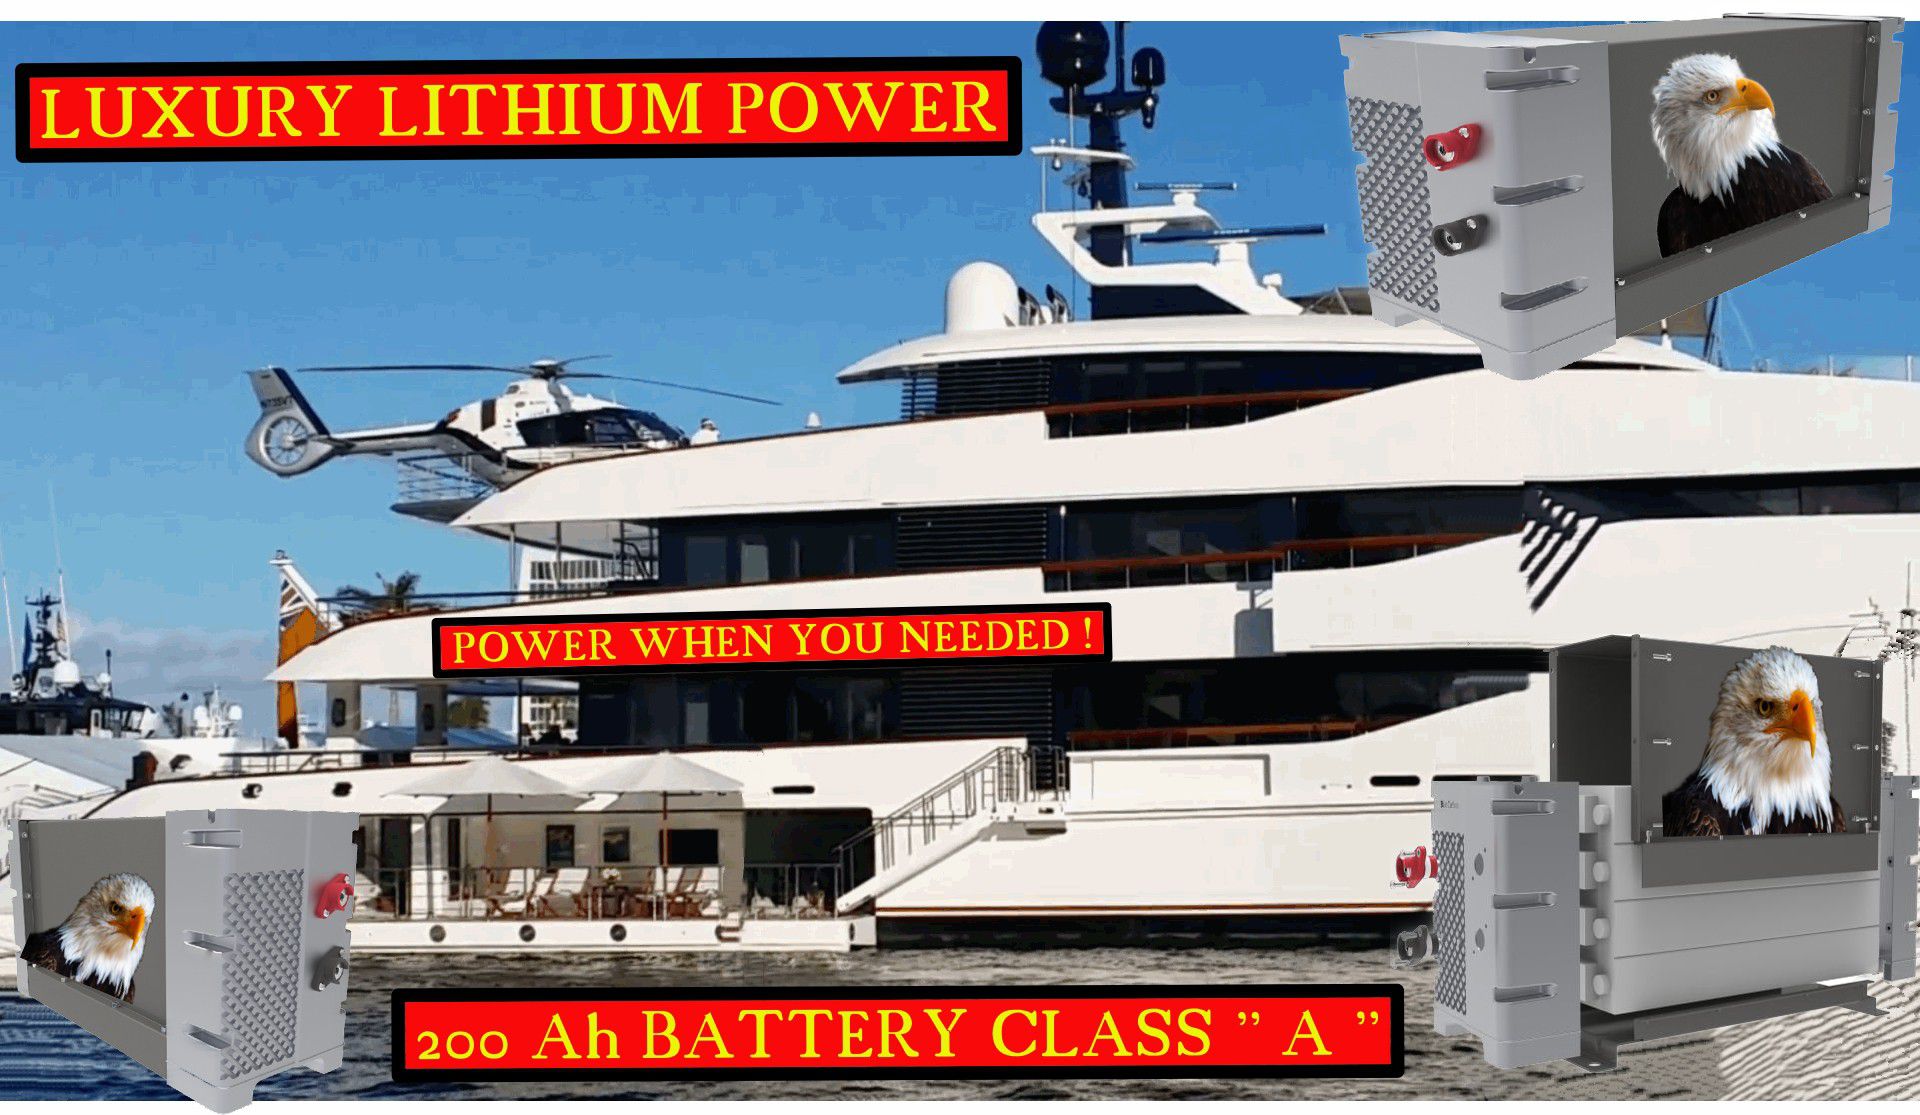 Lithium Battery 200AH ** A **